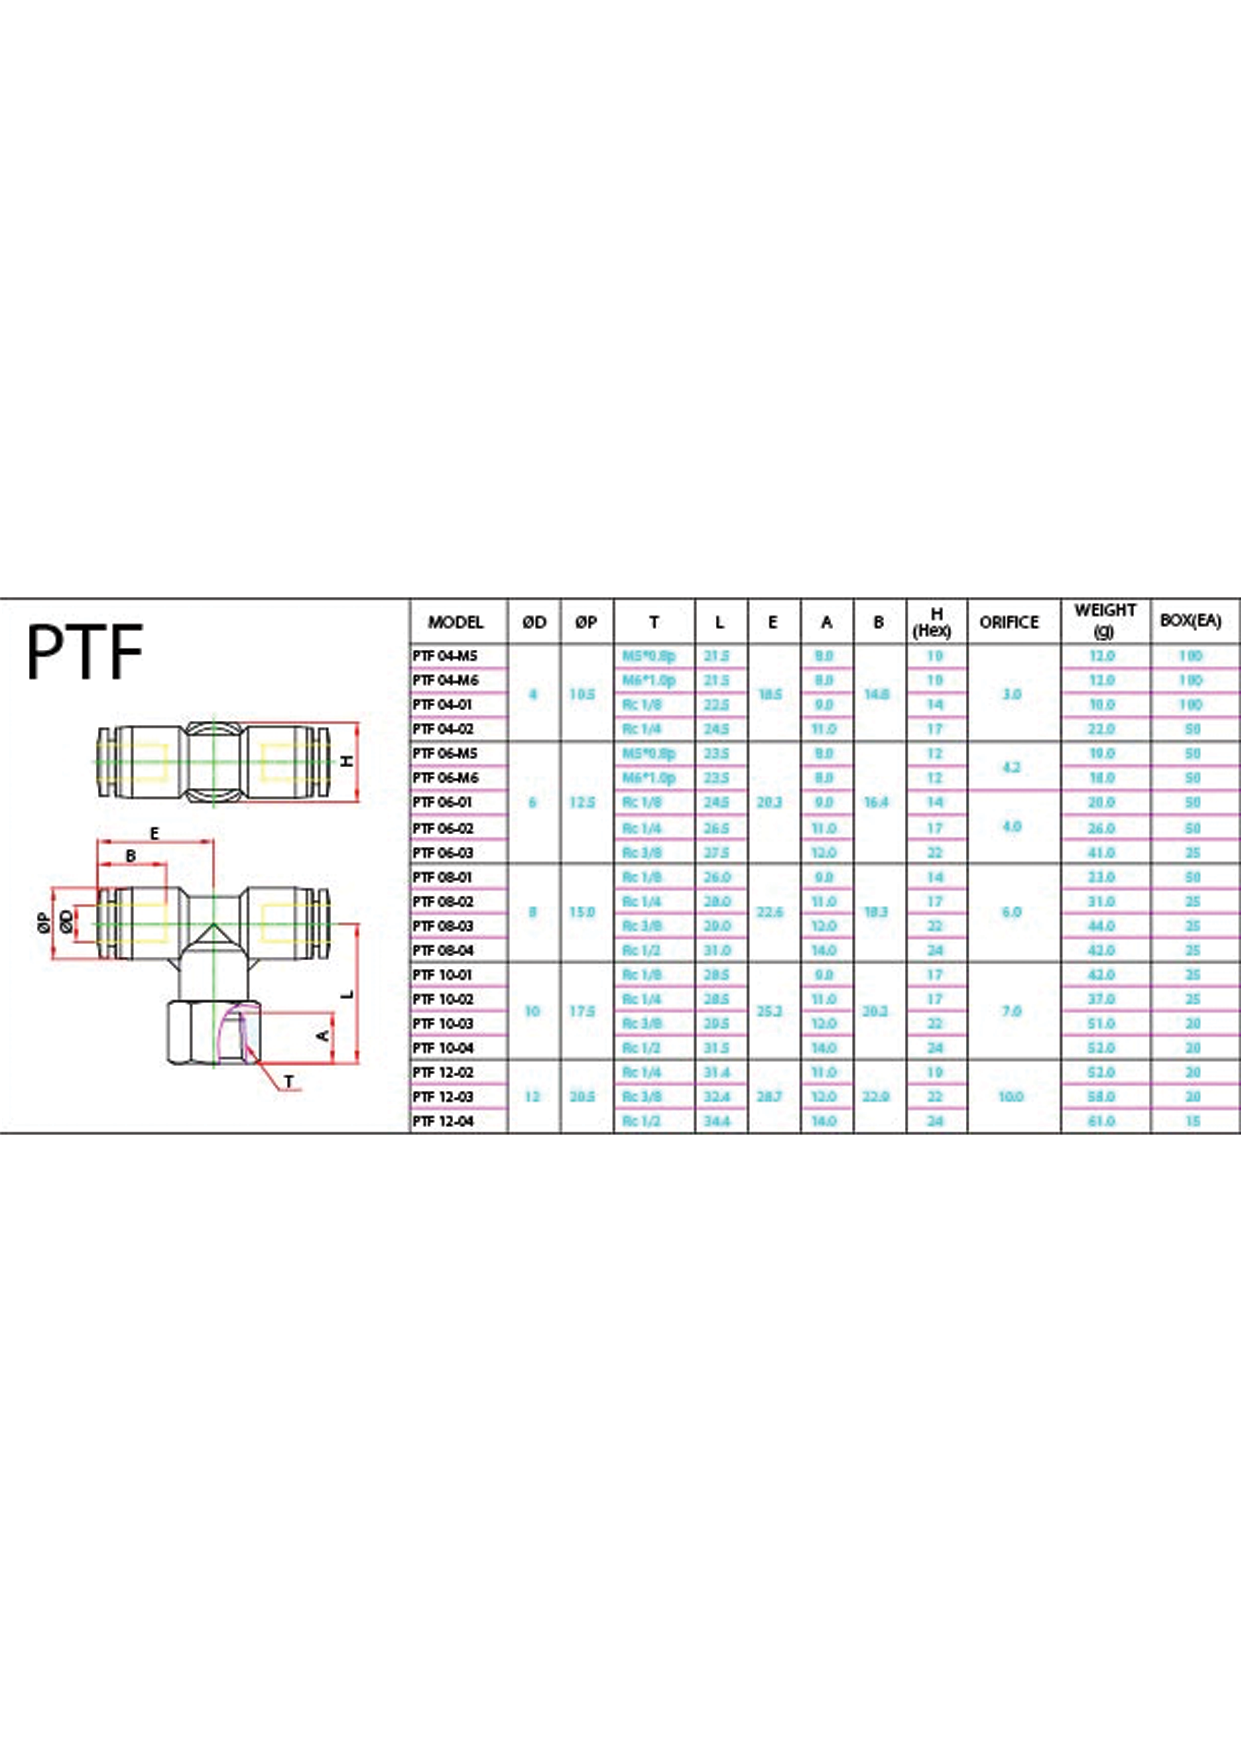 PTF (Metric) Data Sheet ( 134 KB )